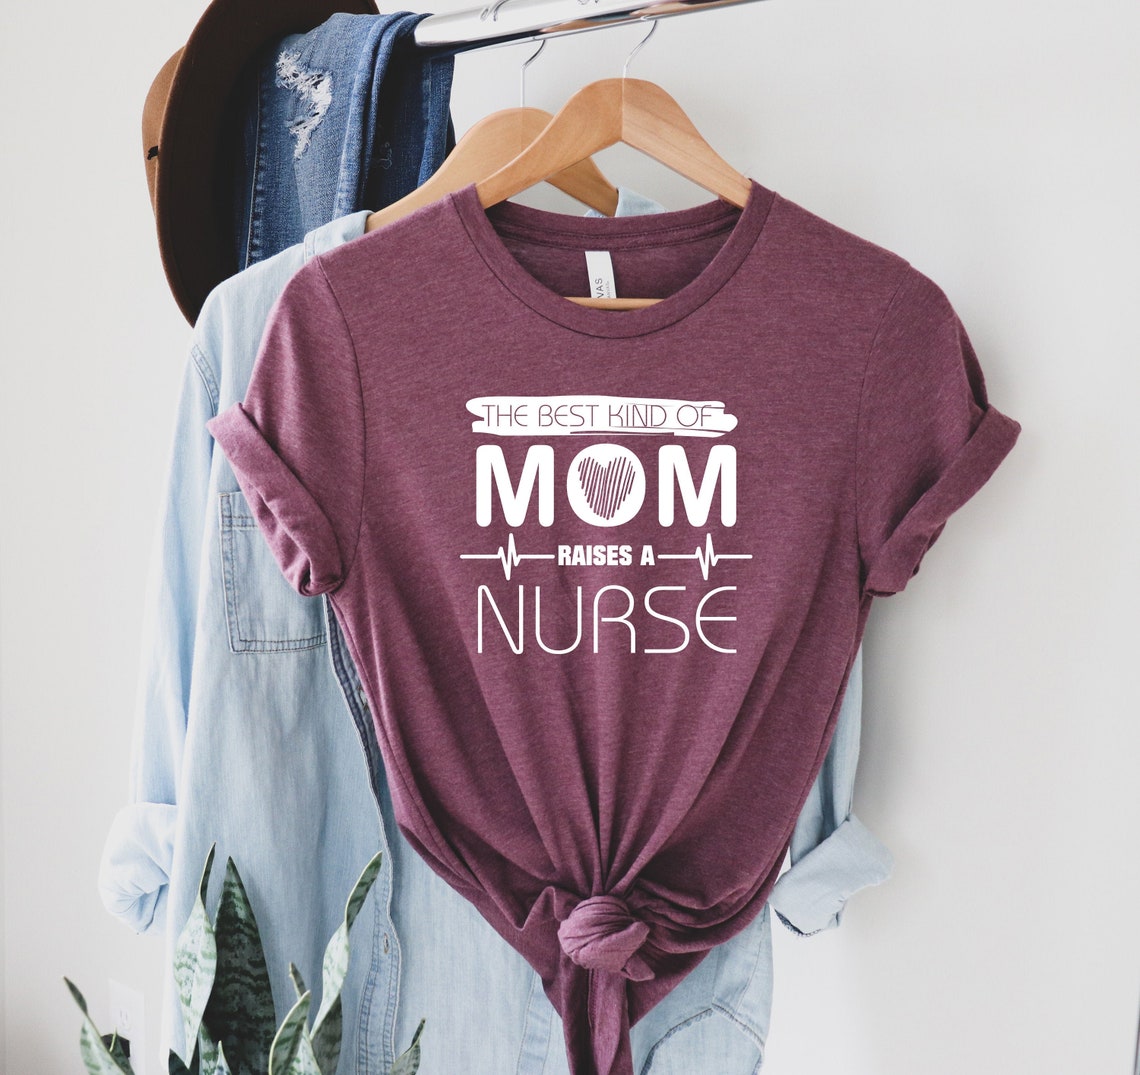 The Best Kind Of Mom Raises a Nurse